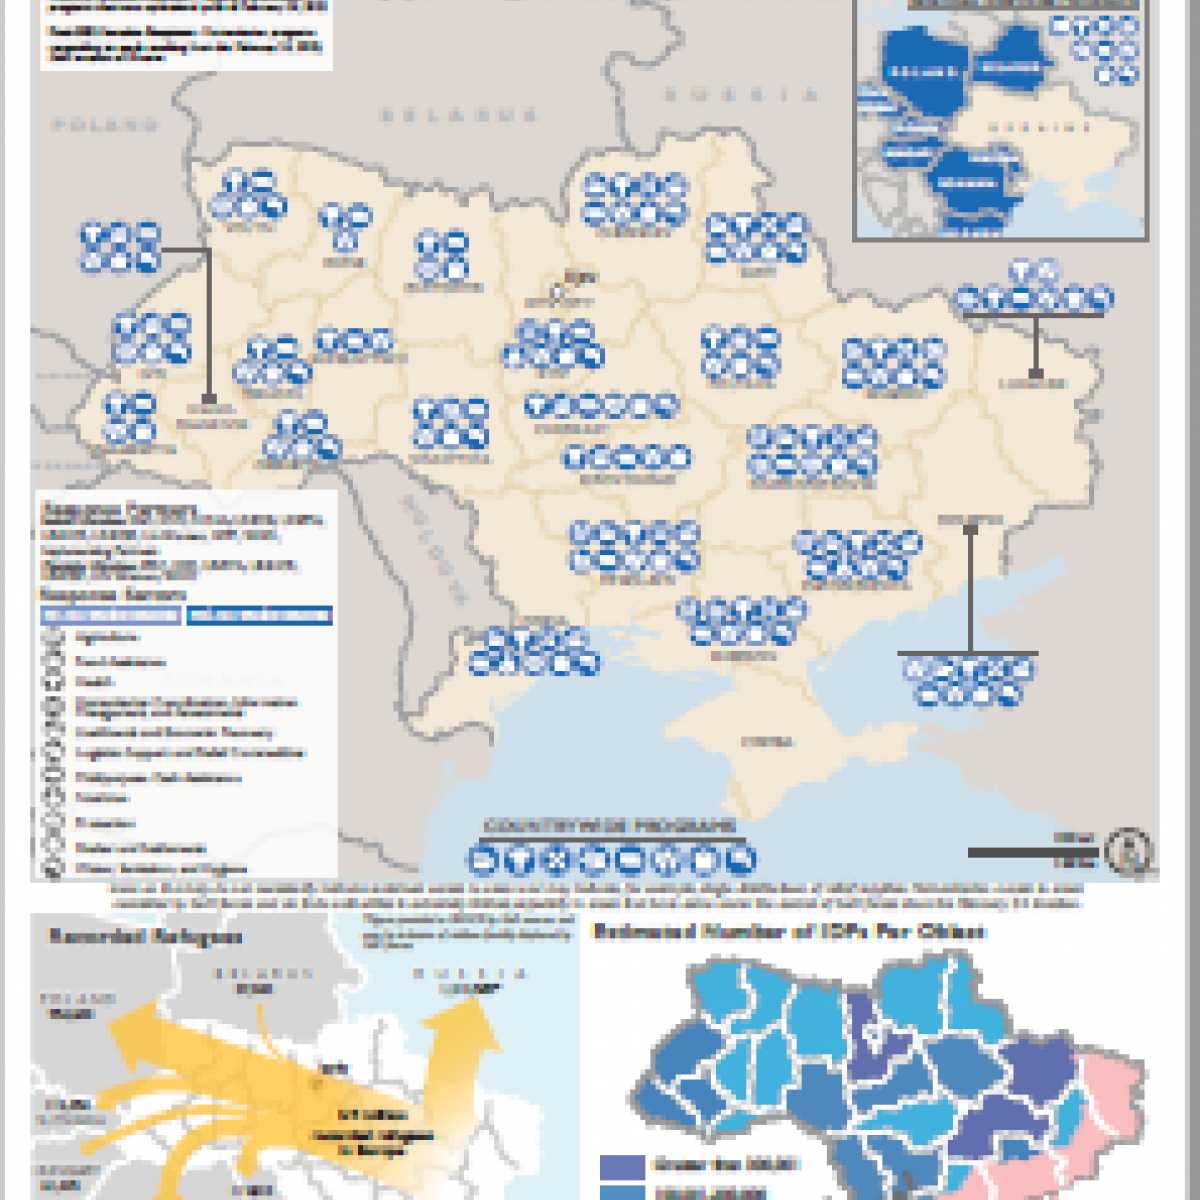 2023-12-07 USG Ukraine Complex Emergency Program Map